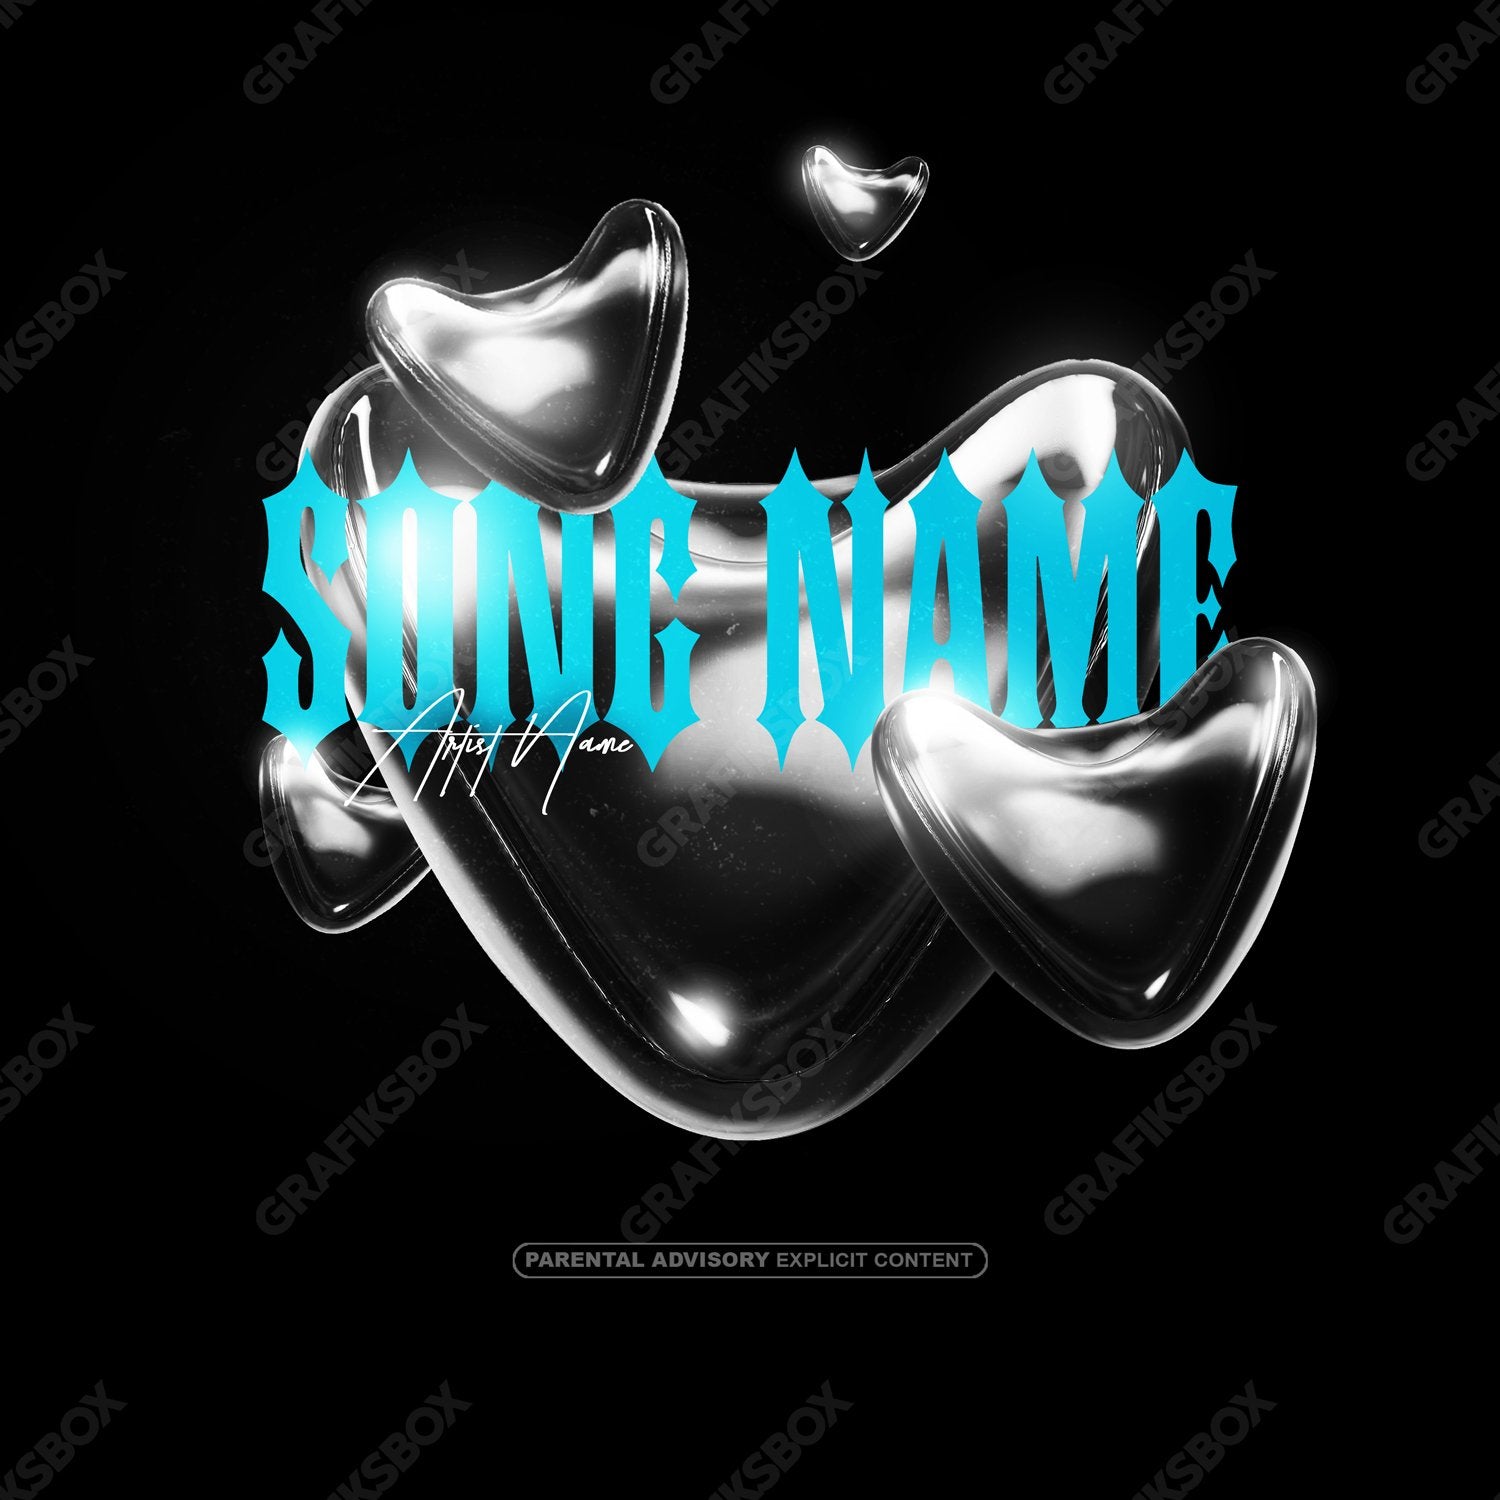 Silver Heart premade cover art